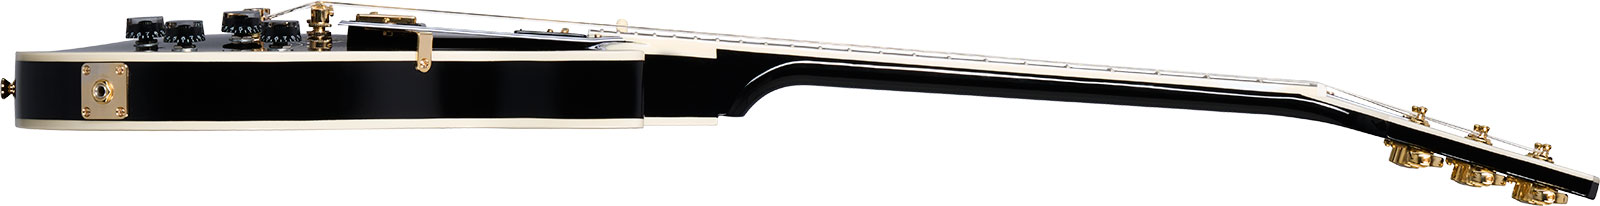 Epiphone Les Paul Custom Inspired By 2h Ht Eb - Ebony - Single cut electric guitar - Variation 2